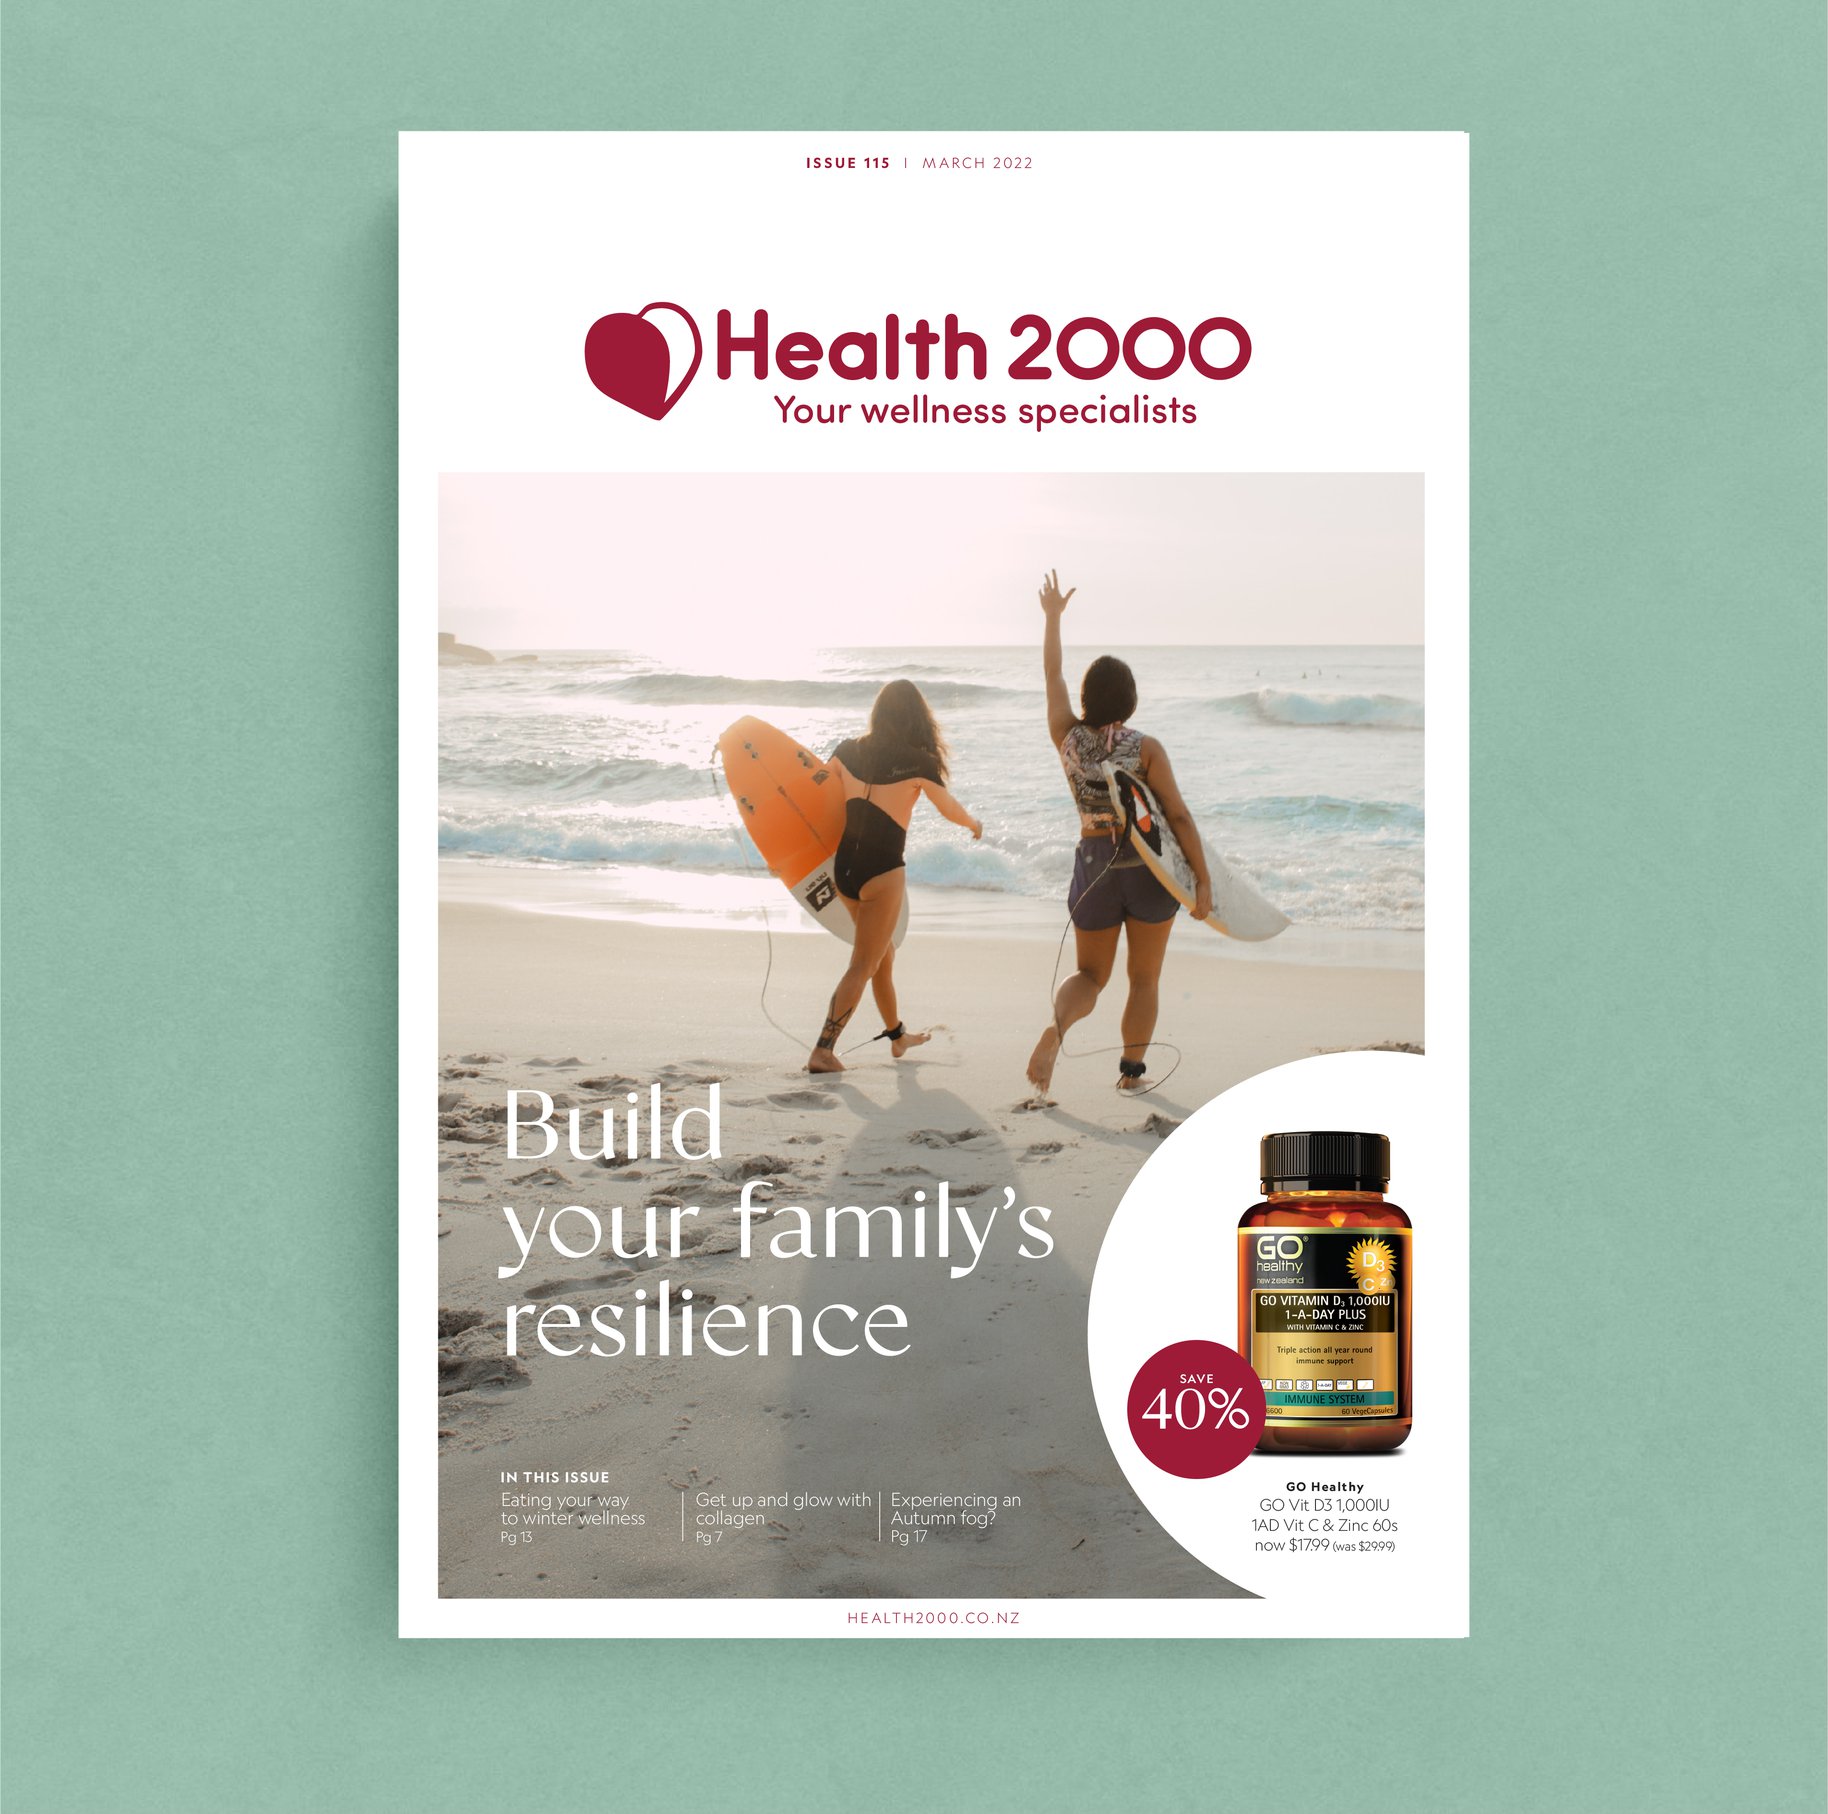 Health 2000 image